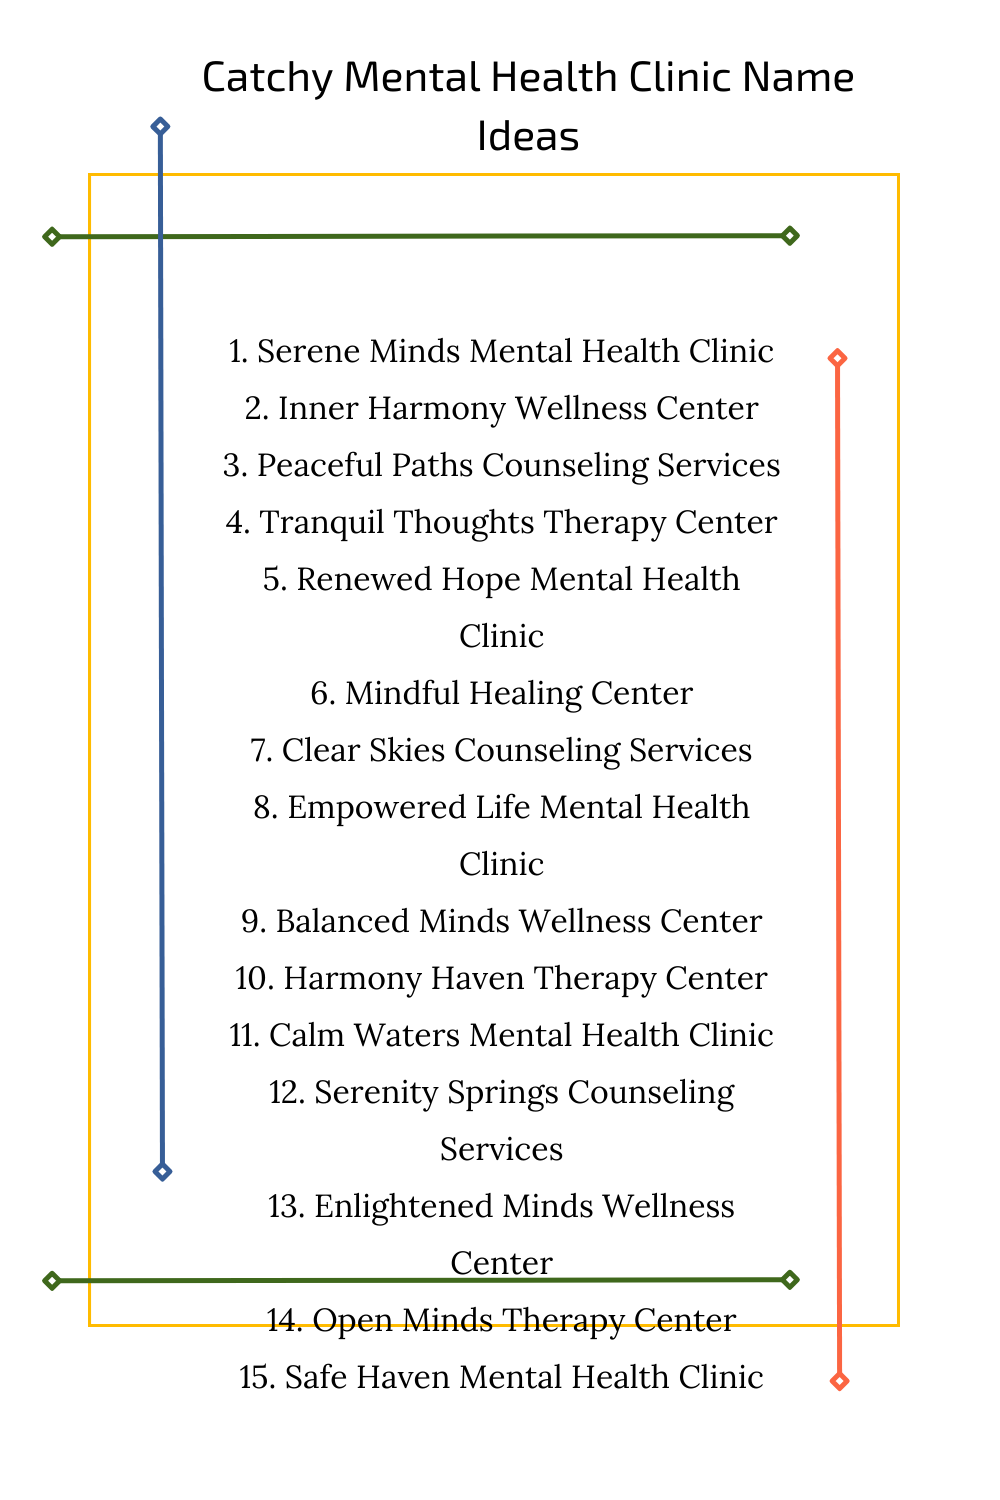 Catchy Mental Health Clinic Name Ideas